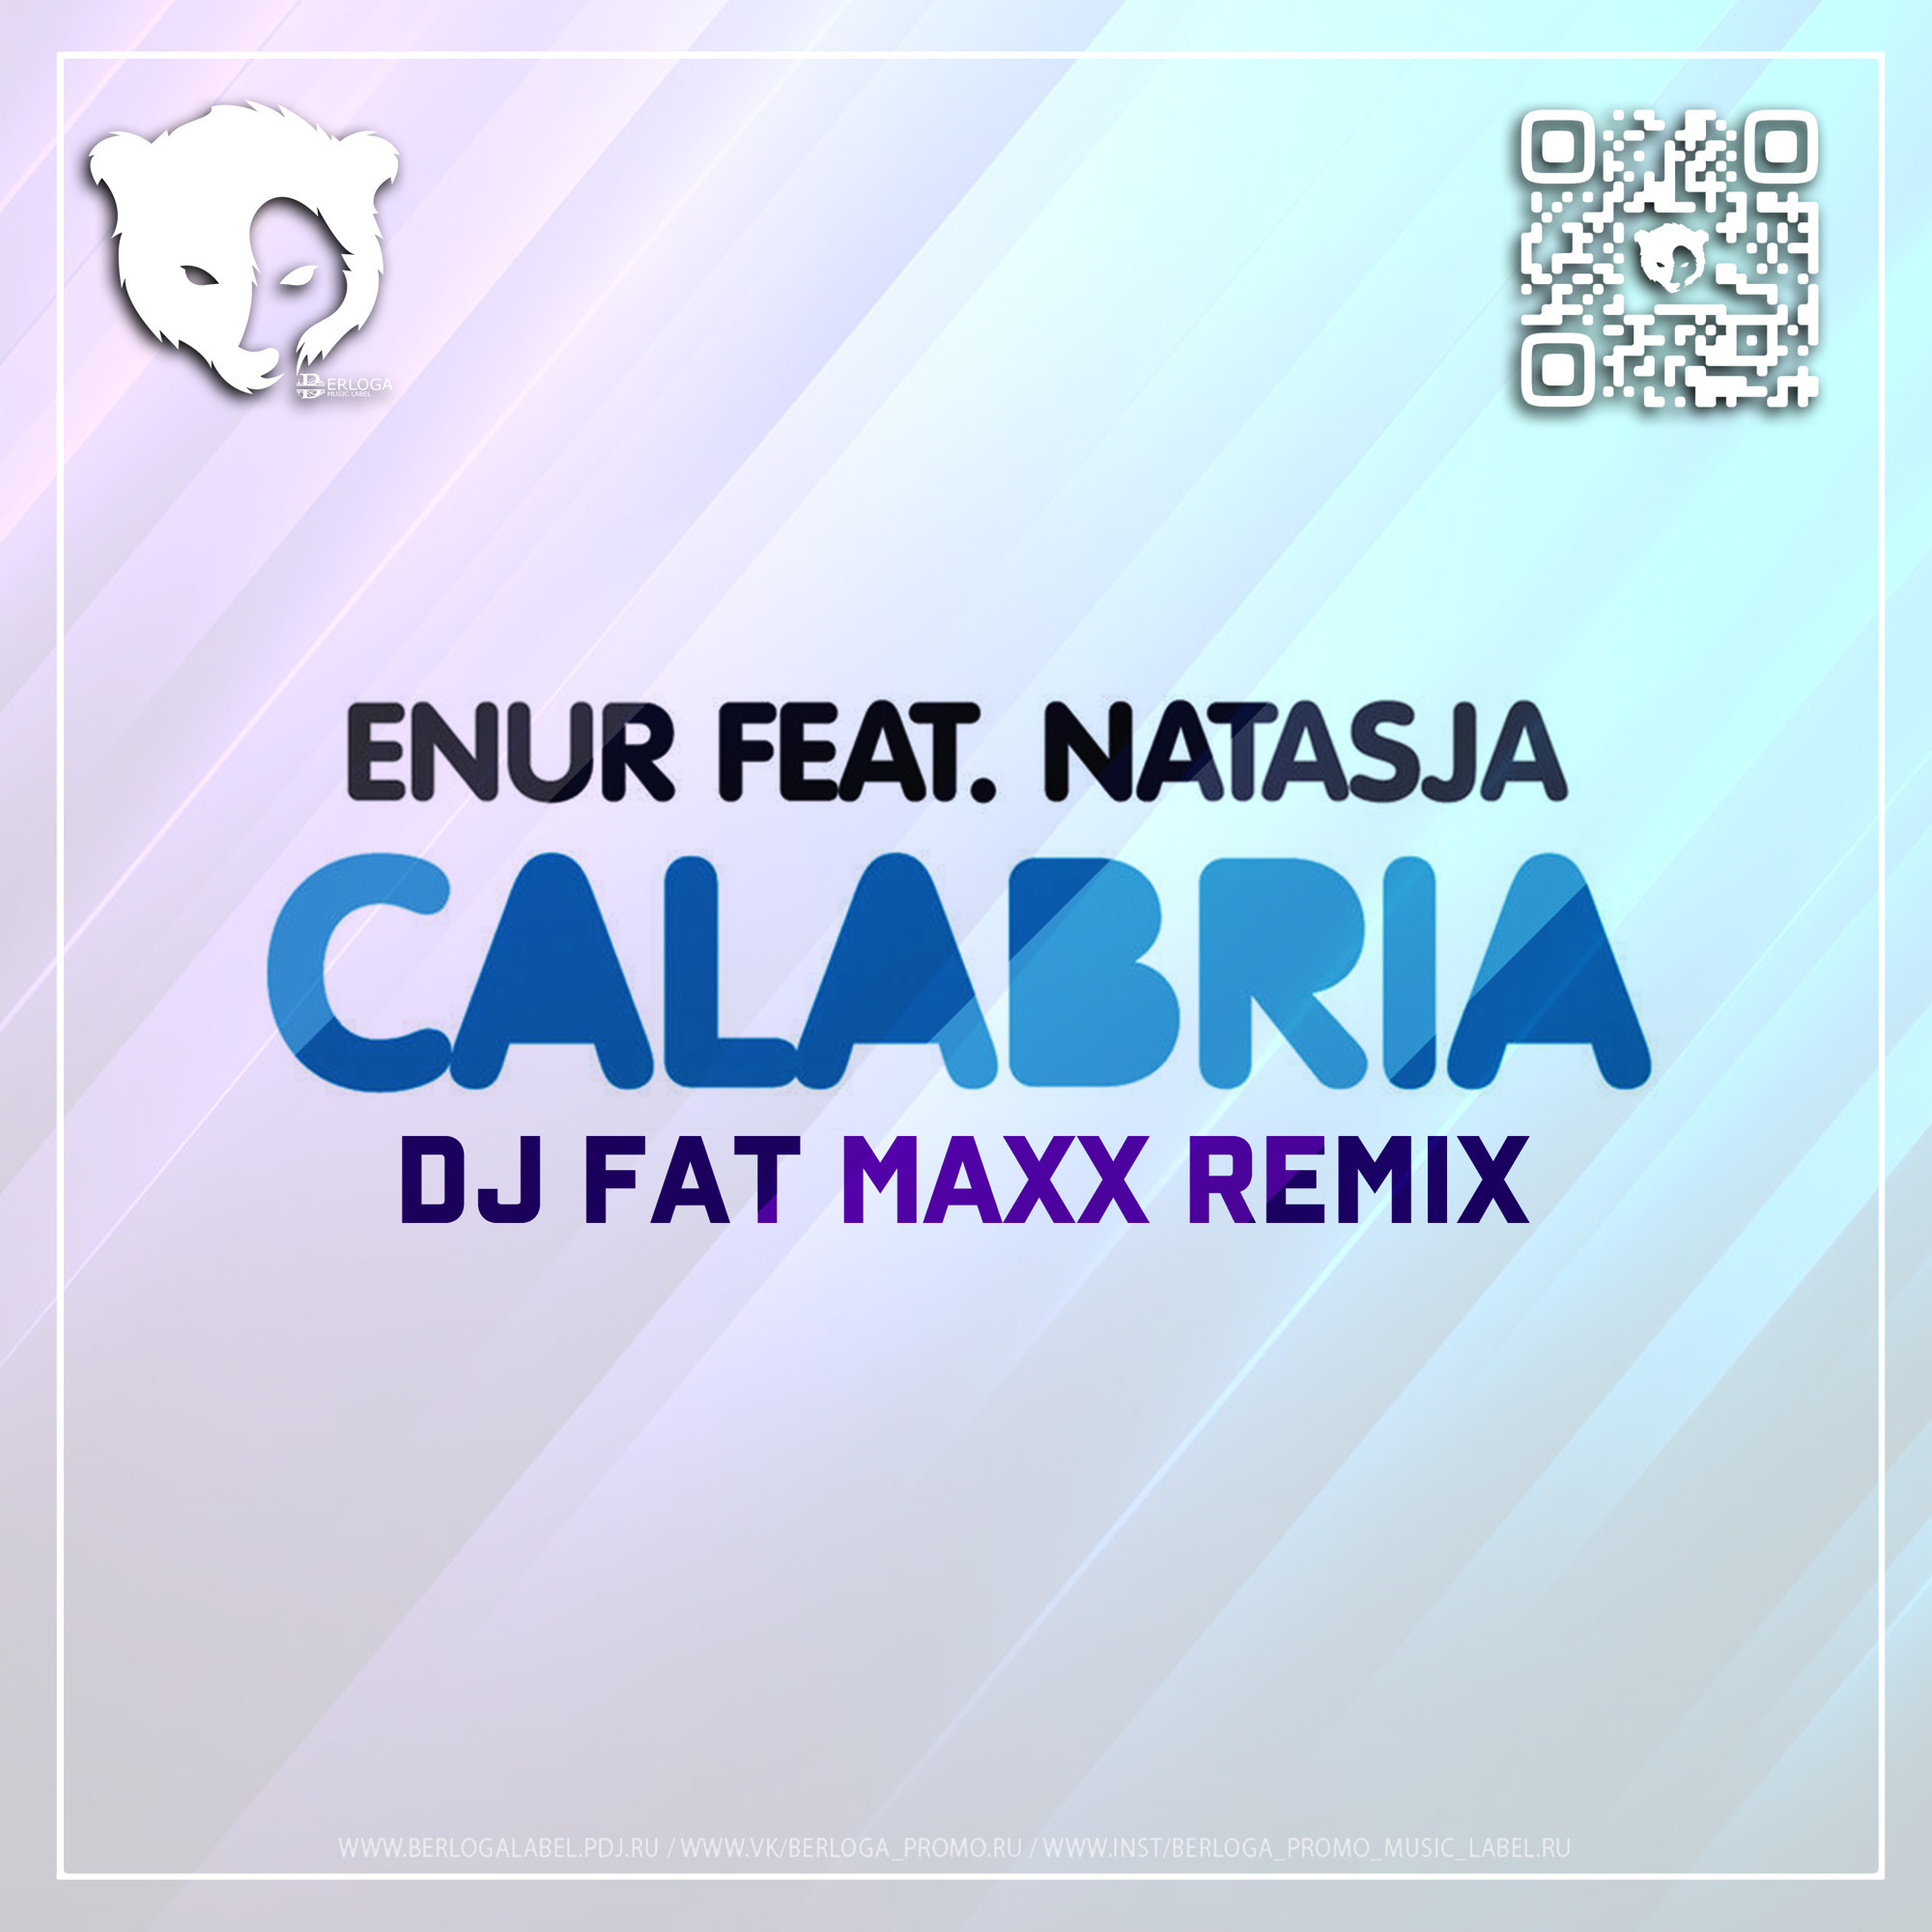 Дым бомбим fat maxx remix. Enur feat. Natasja Calabria 2007. Enur x Natasja - Calabria (DJ fat Maxx Remix). Get a way - Original + Remixes Maxx.